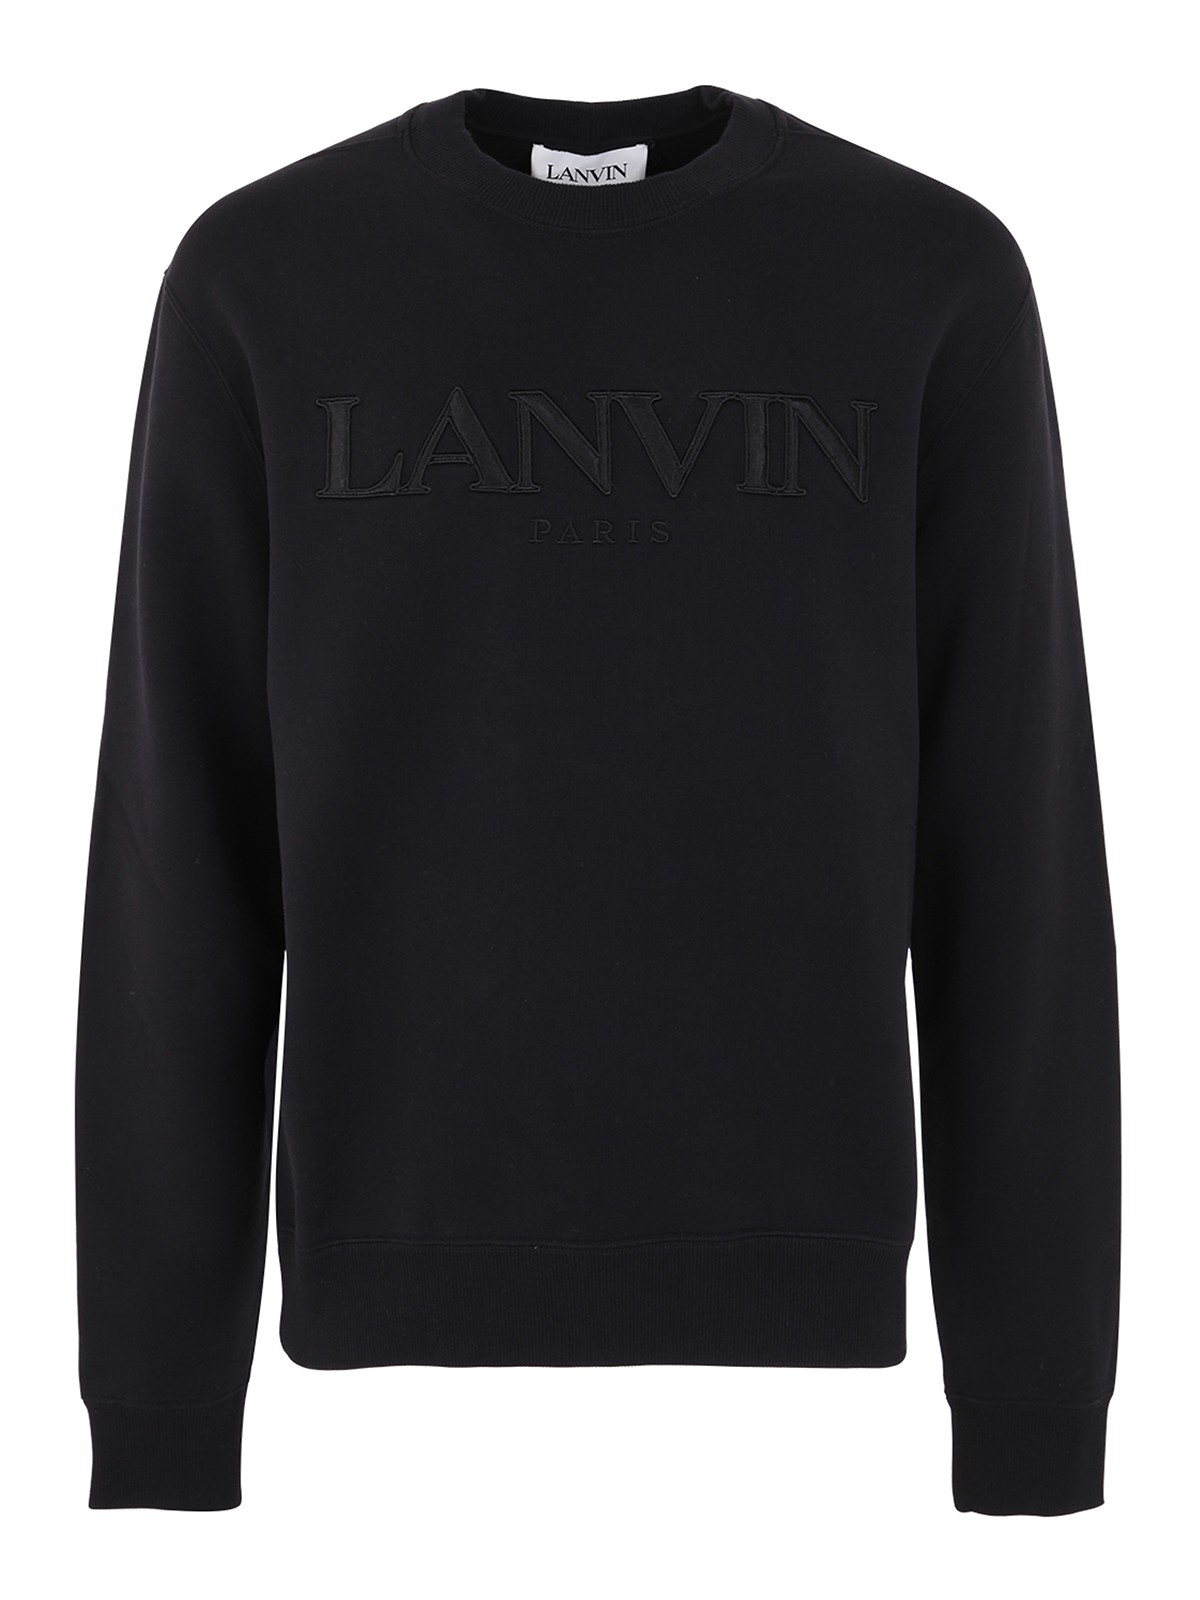 Lanvin Embrodery Sweatshirt In Black